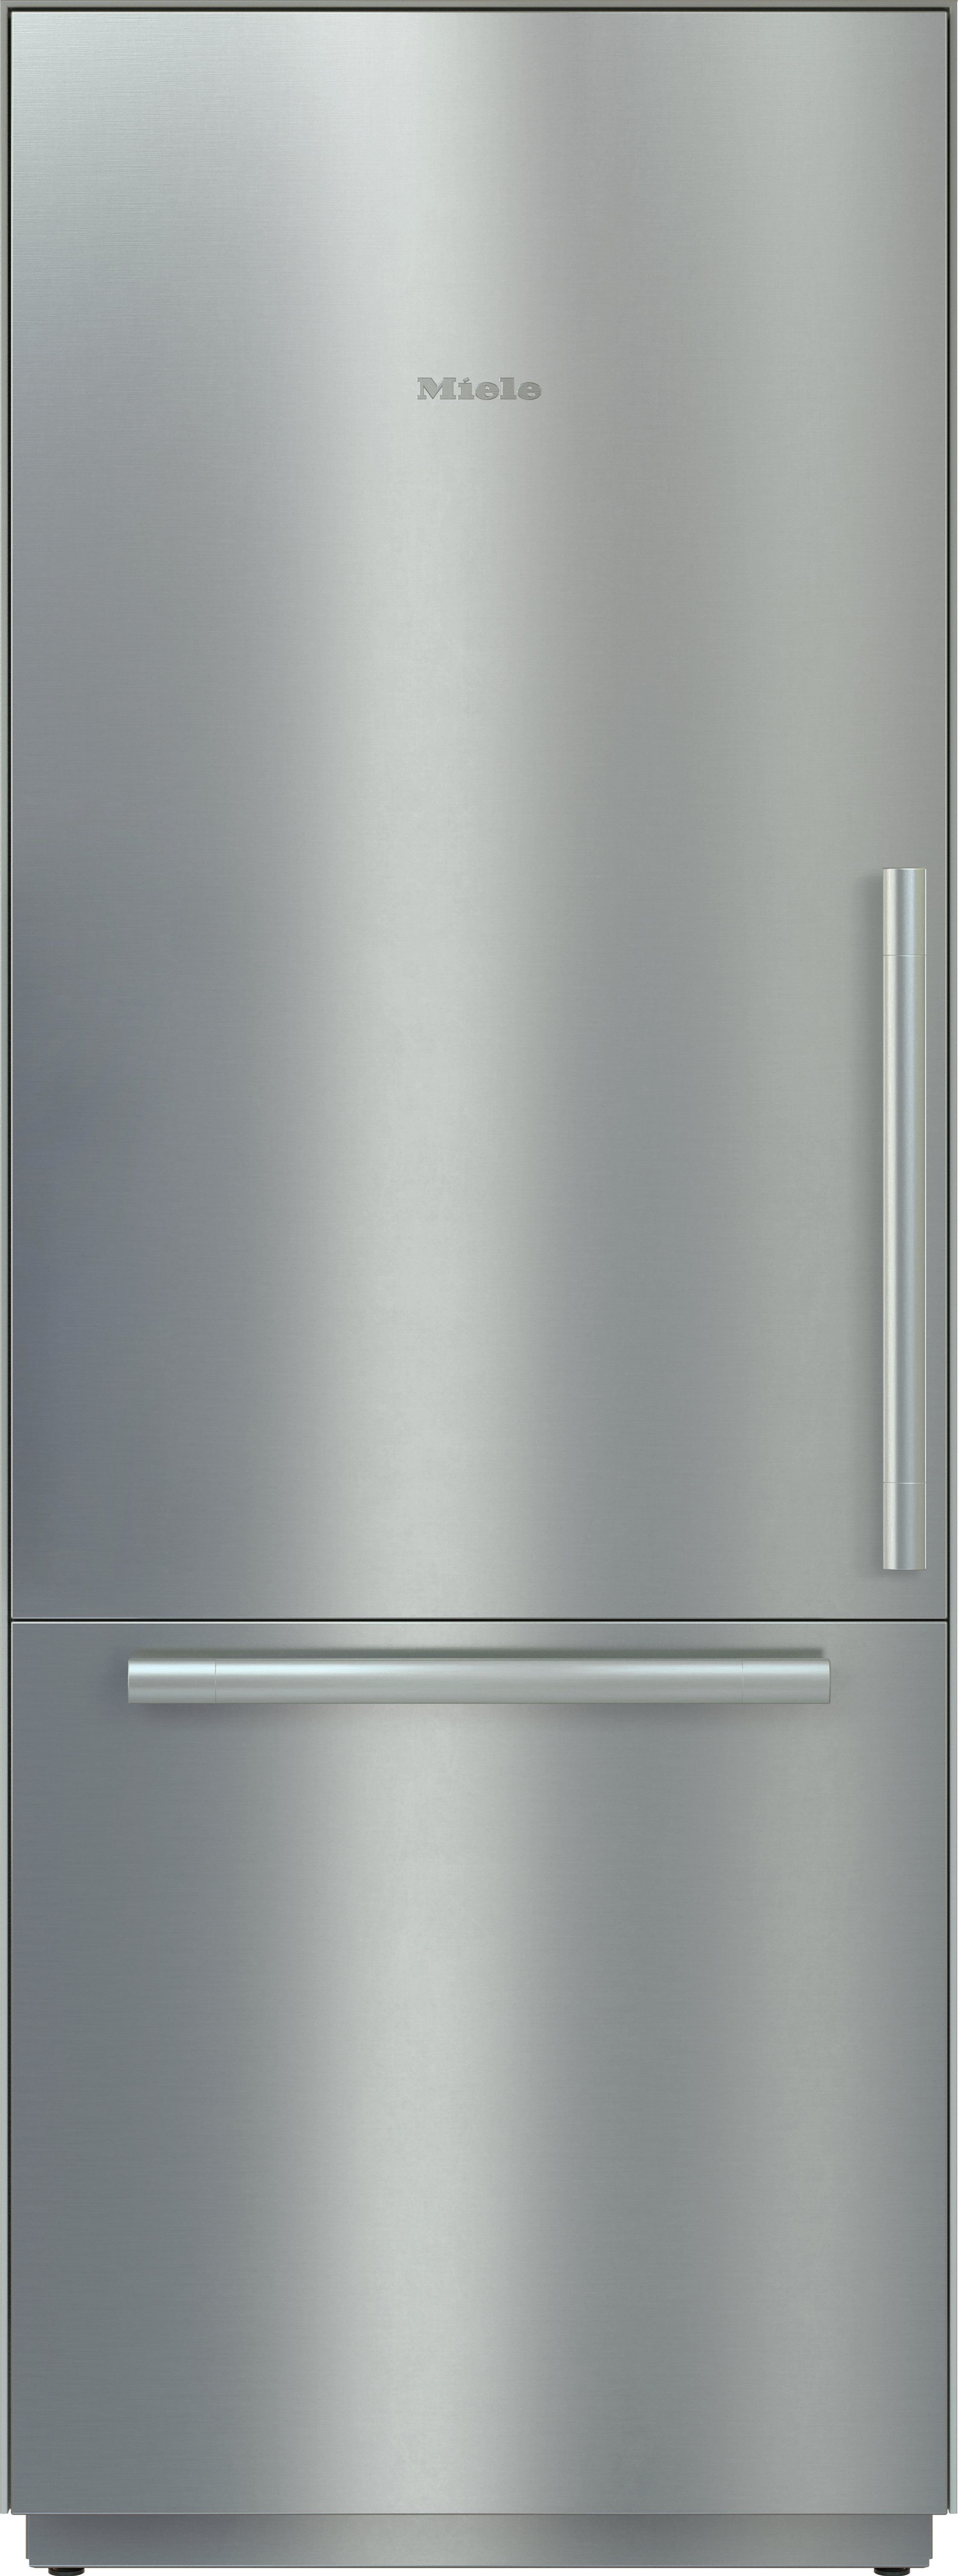 Miele 30 Inch MasterCool 30 Built In Counter Depth Bottom Freezer Refrigerator KF2812SF